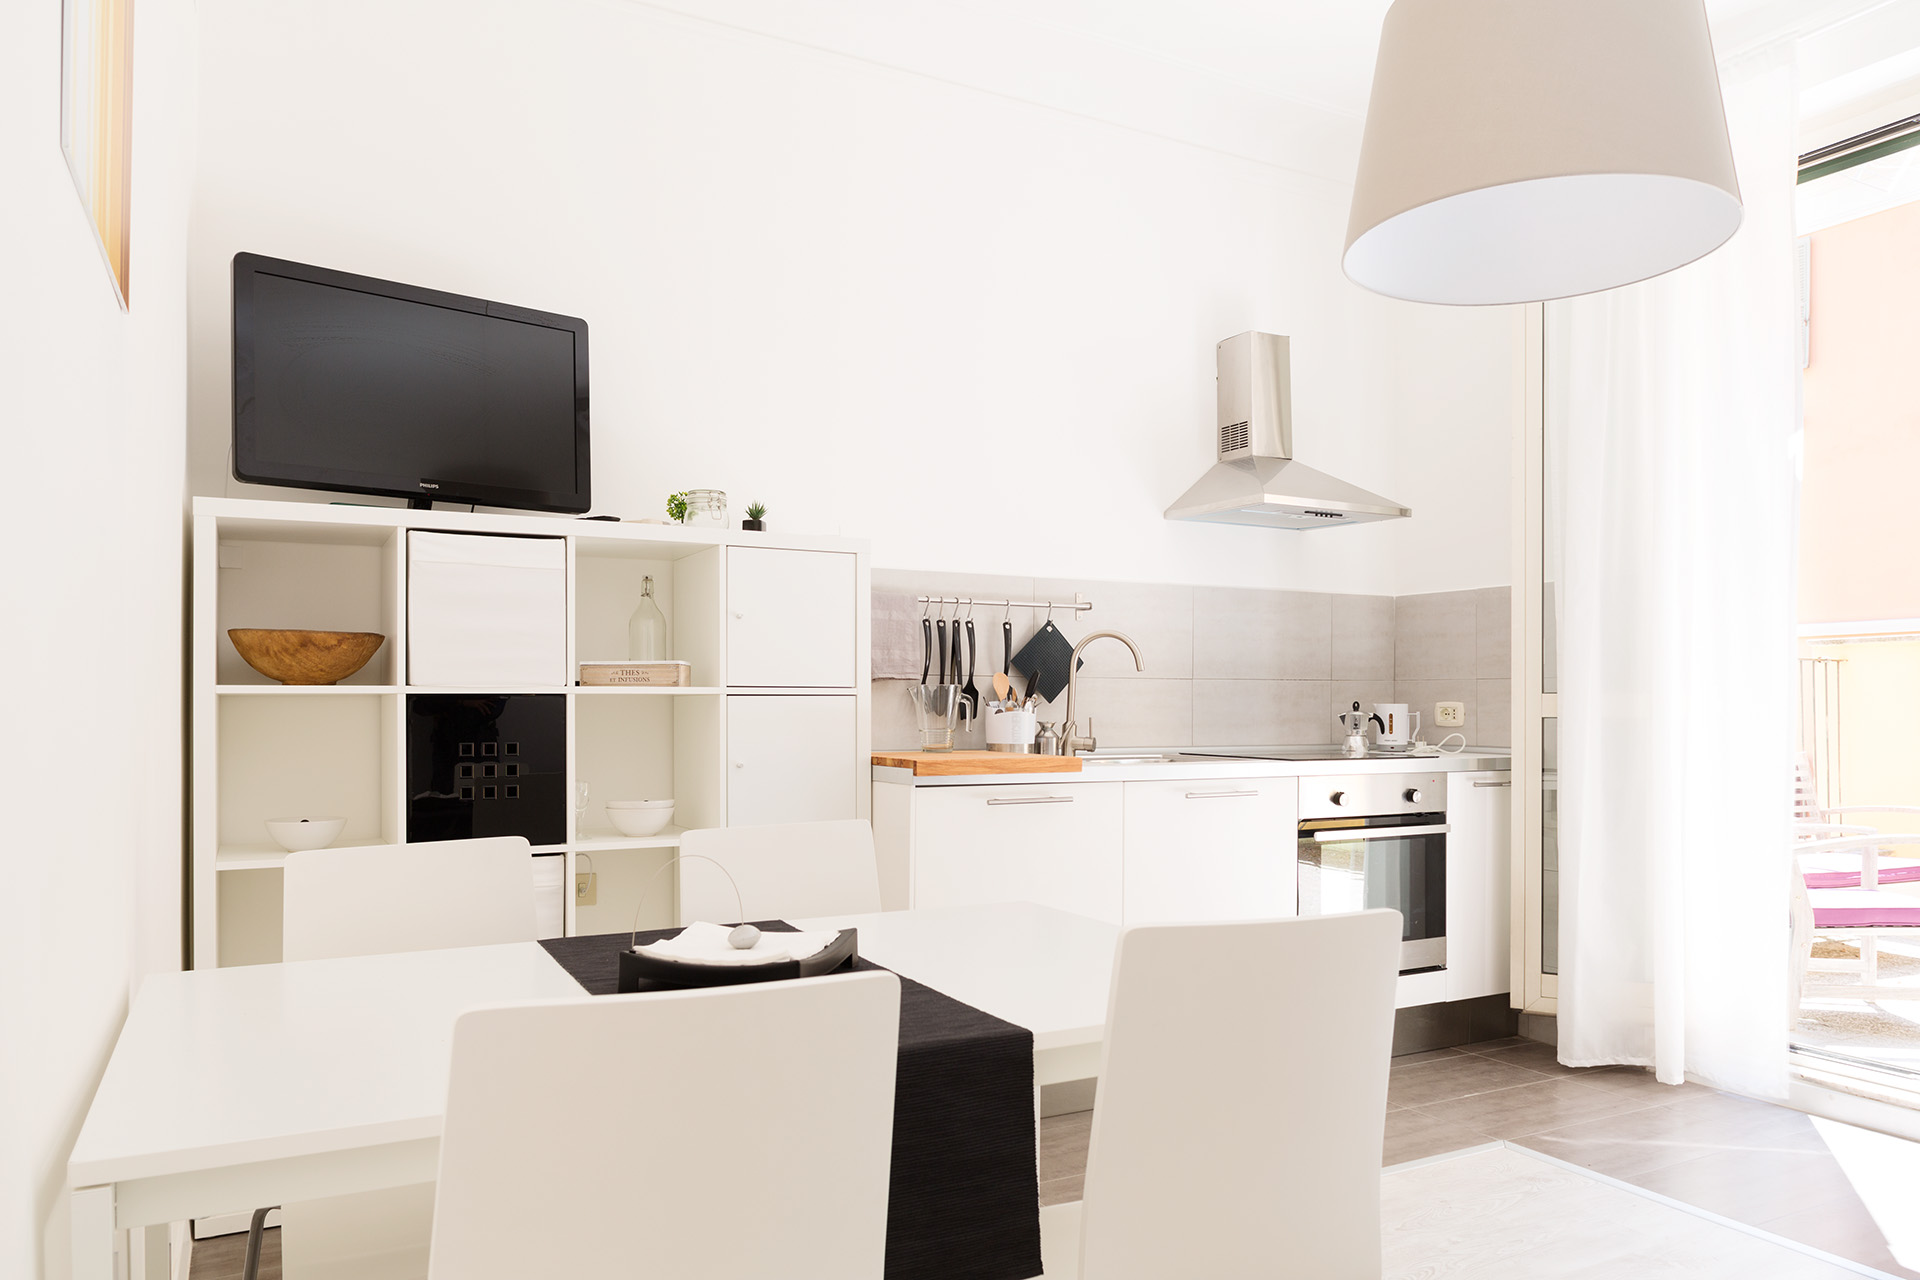 Fotografia d'interni: cucina della casa vacanze Home Inn Rome. copyright © _nf